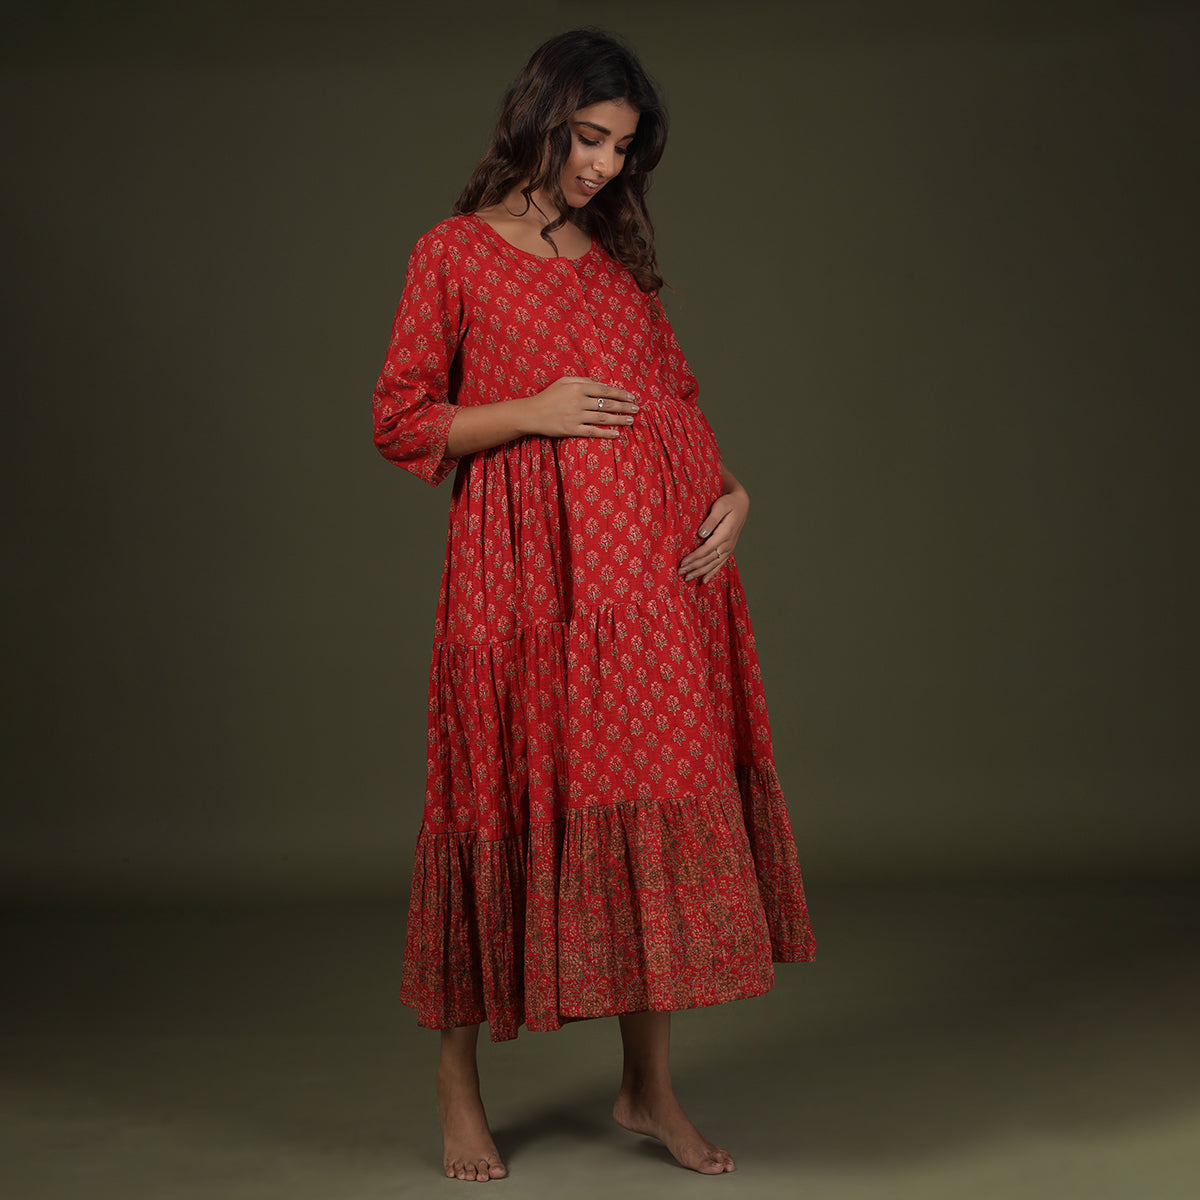 Floral Print on Red Maternity Dress Jisora Jaipur